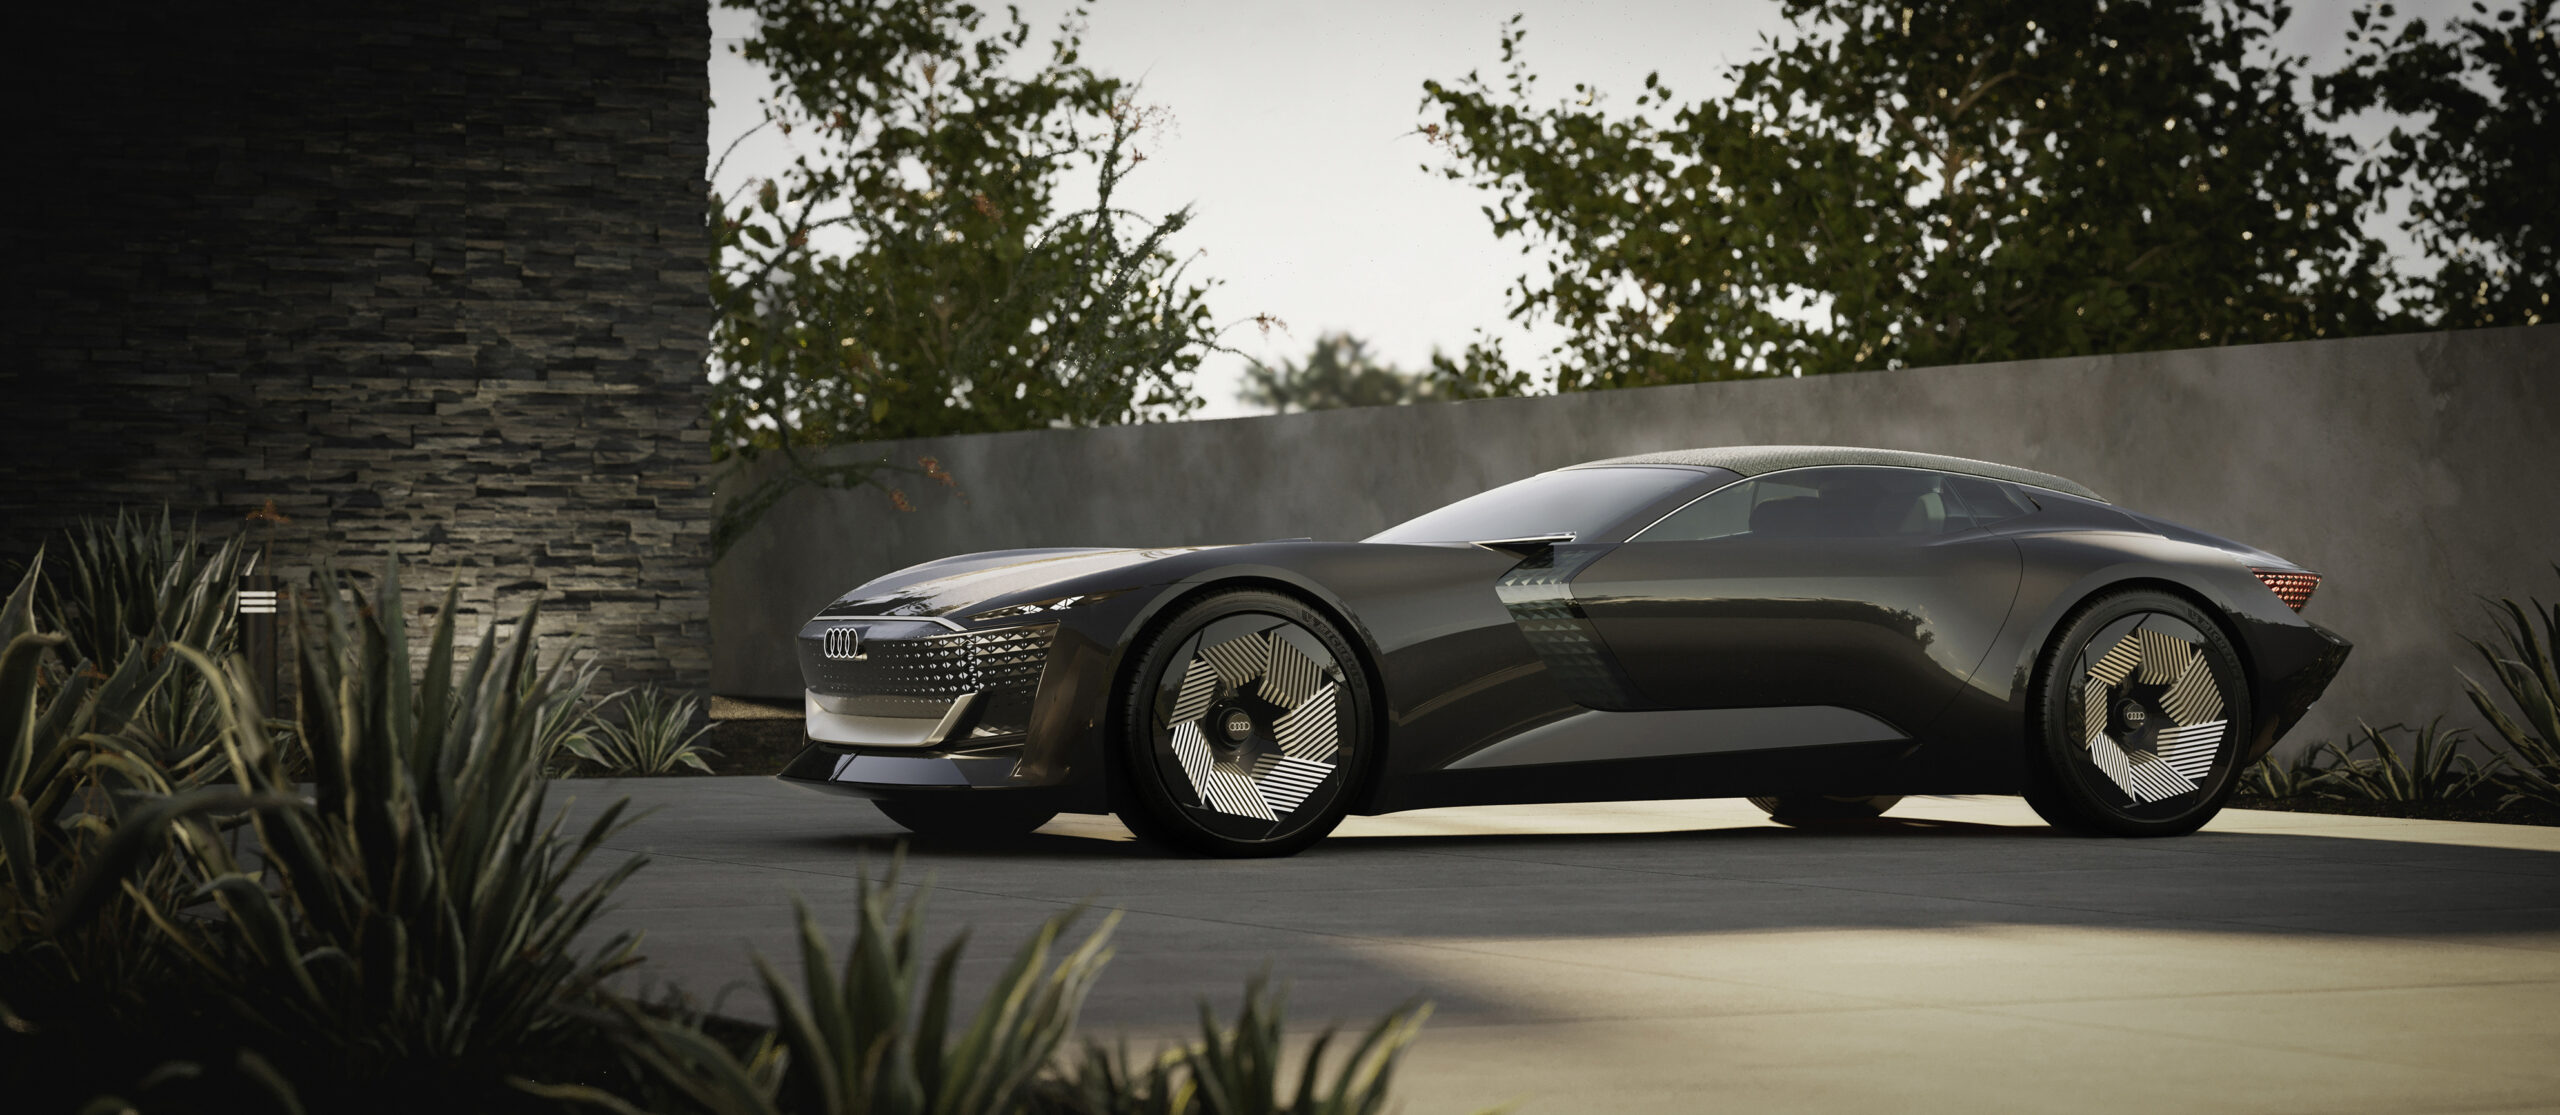 Audi Unveils Skysphere Concept: Electric Luxury with Autonomous Capabilities